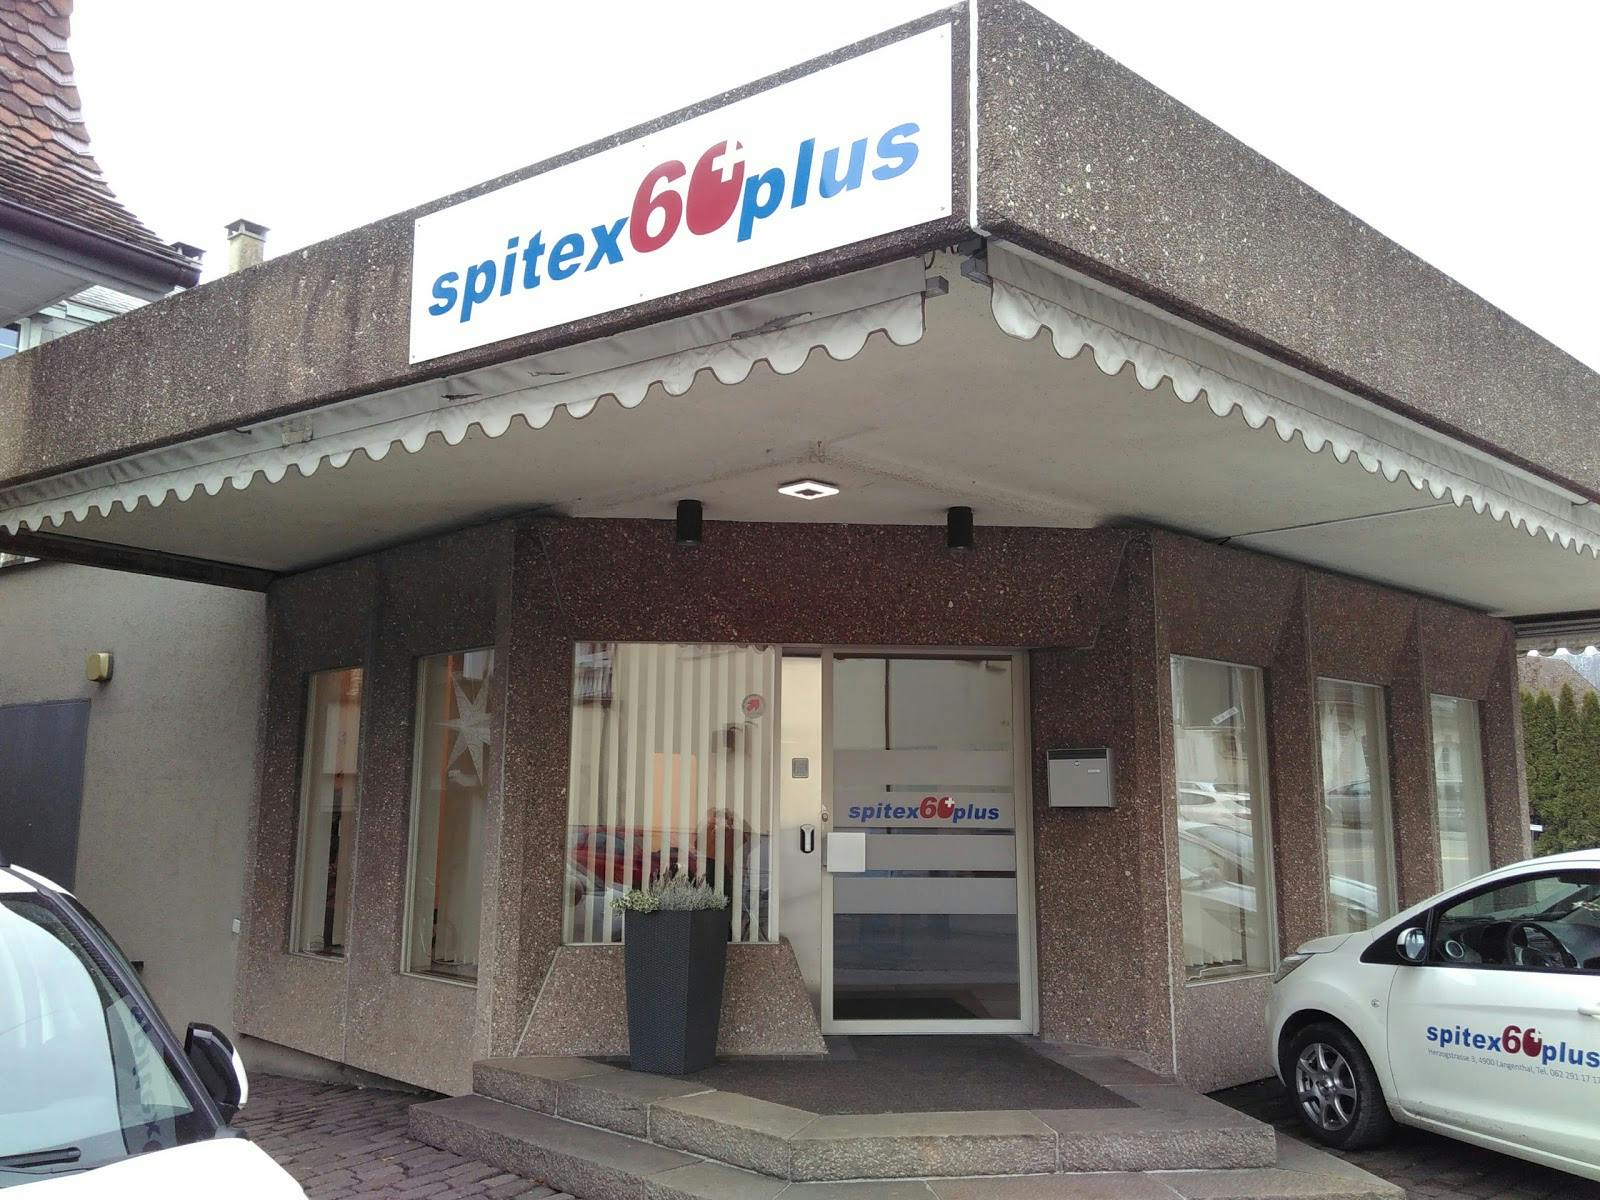 Spitex 60plus GmbH